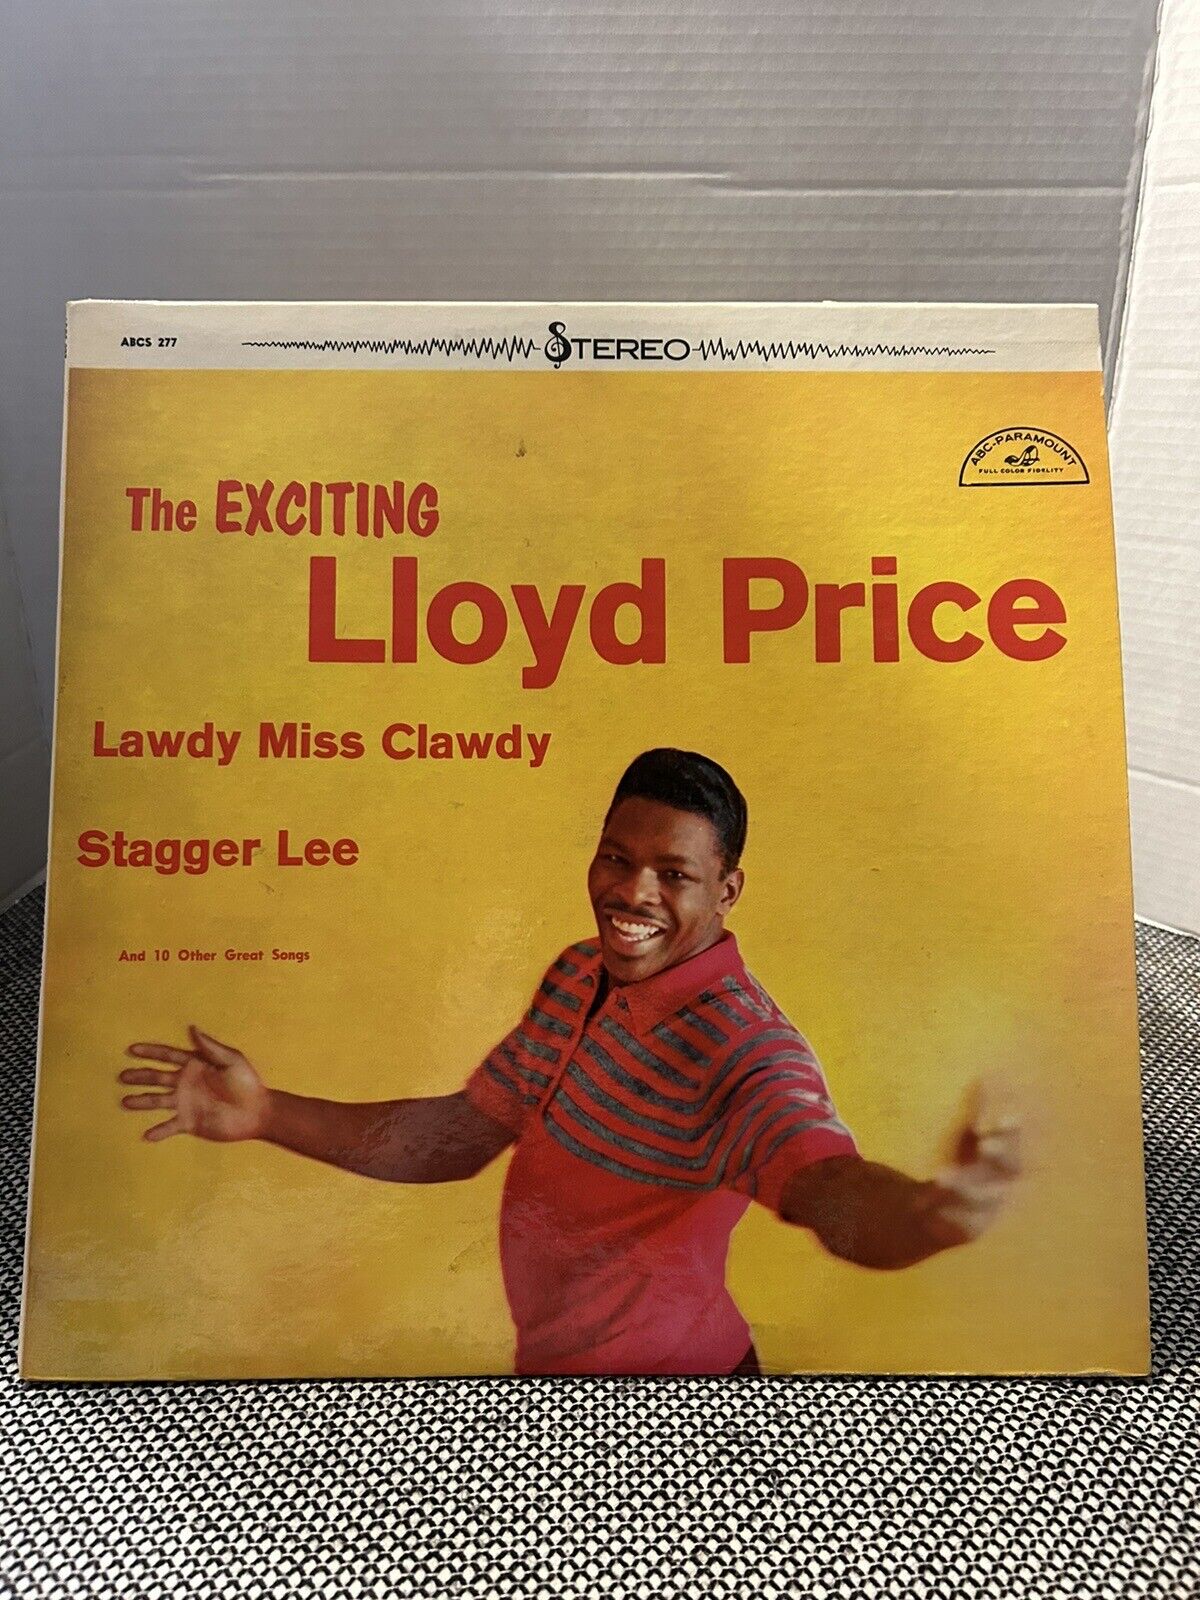 Lloyd Price - The Exciting Lloyd Price 1959 ABCS-277 1st Pressing Vinyl LP